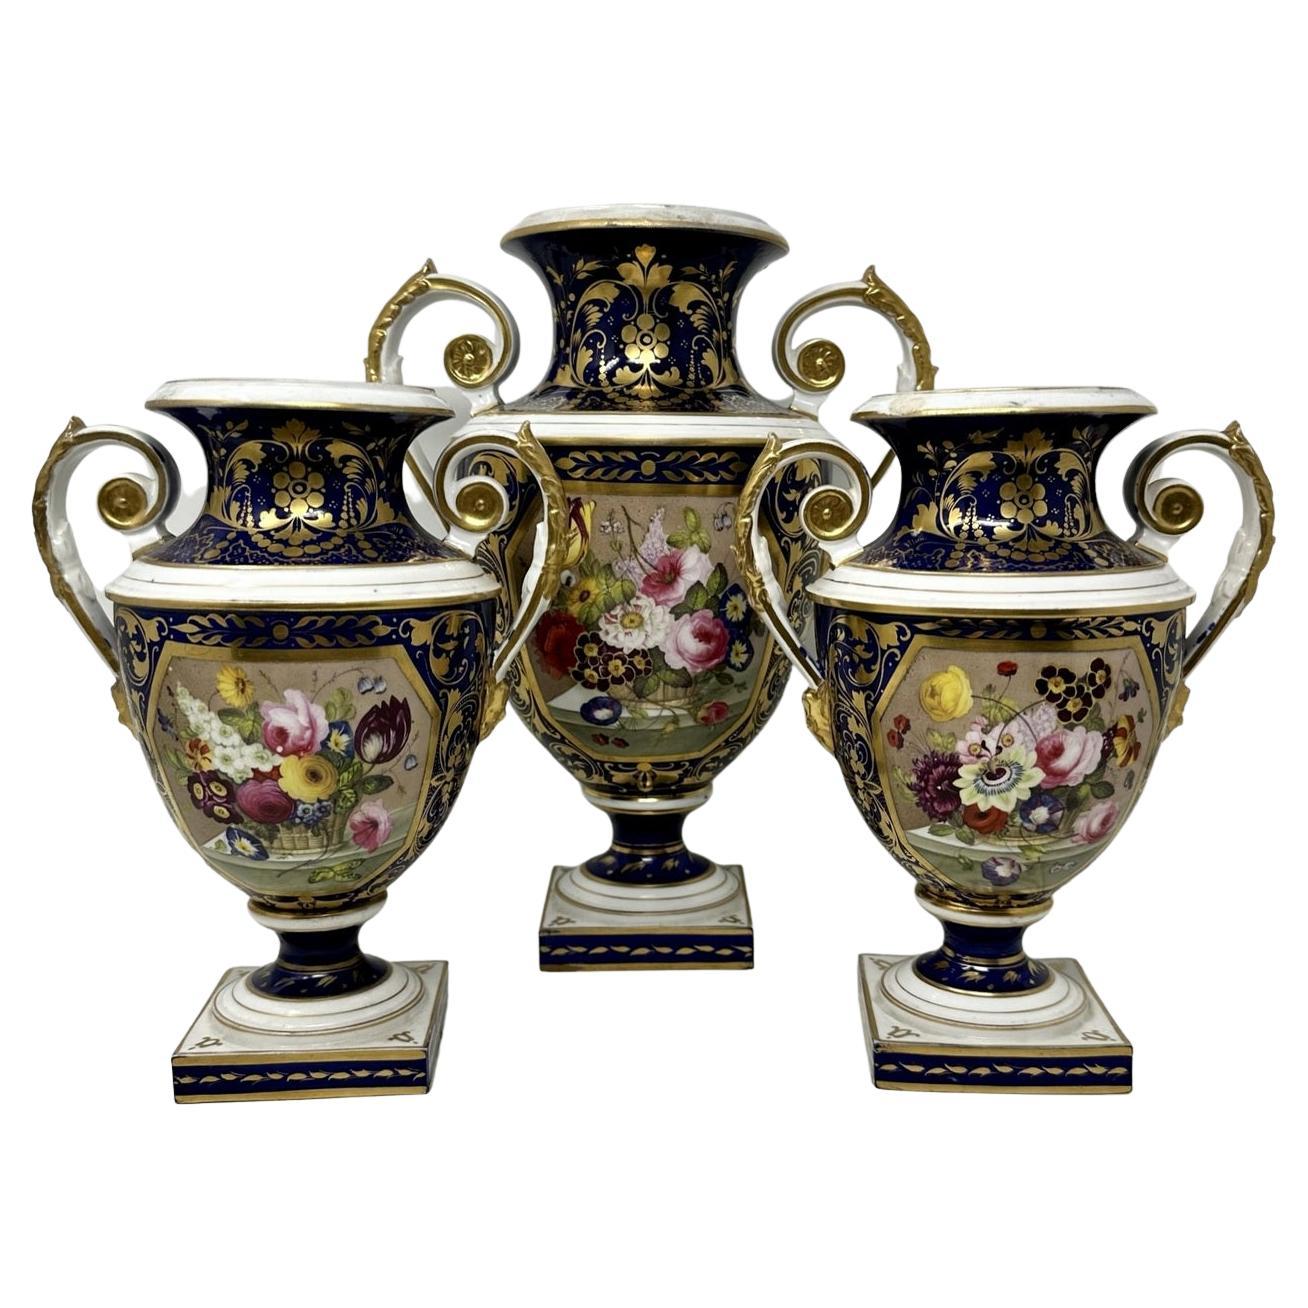 Antique Garniture English Royal Crown Derby Porcelain Vases by Thomas Steel 19C  For Sale